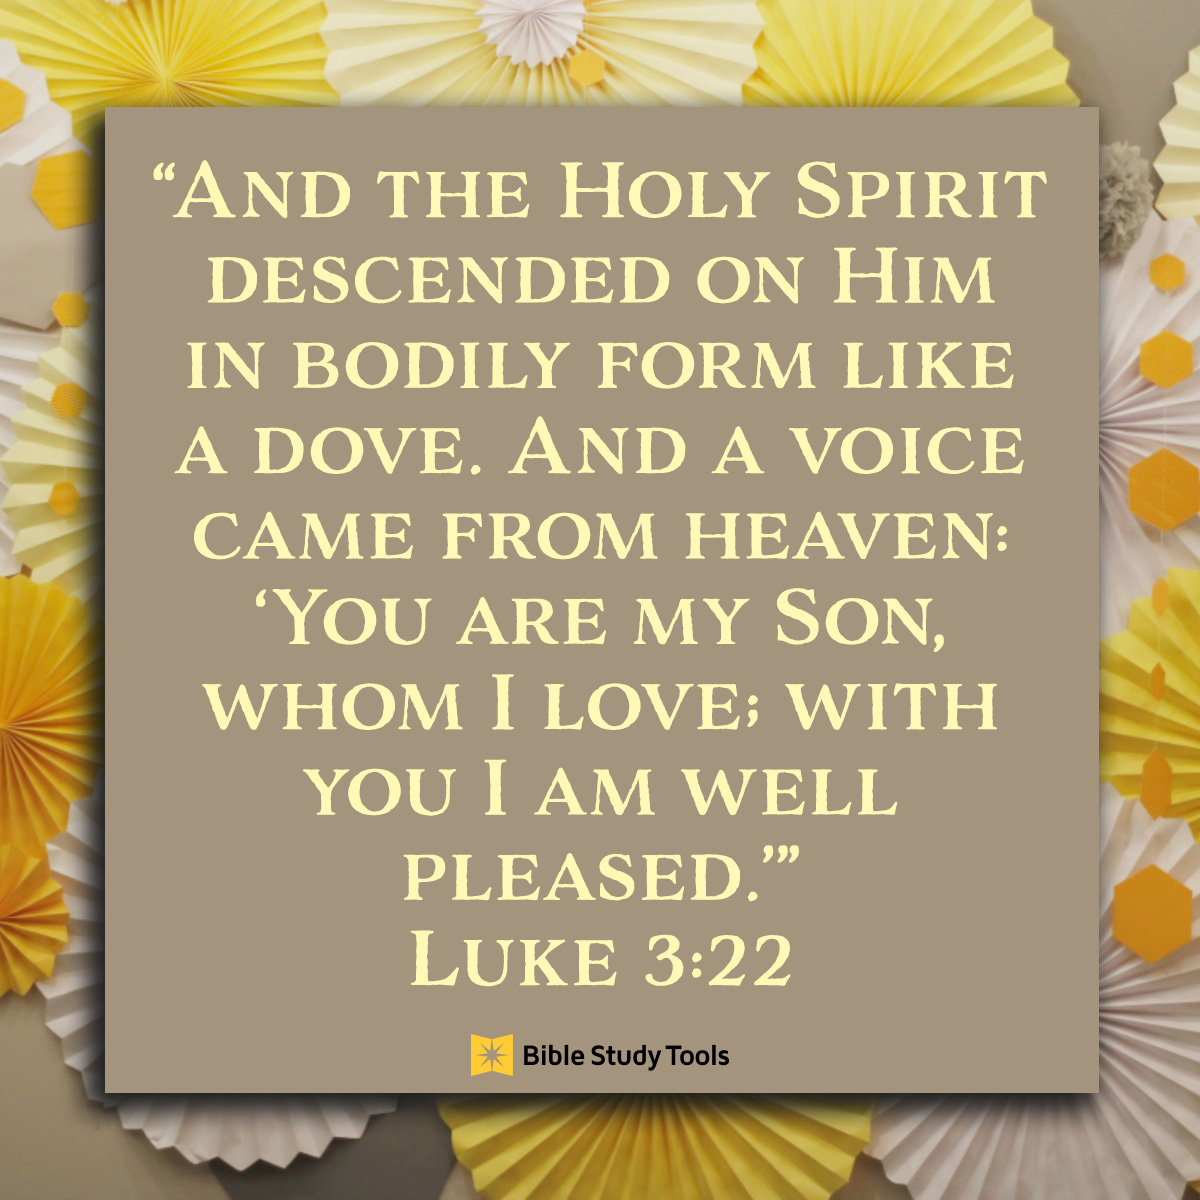 Luke 3:22, inspirational image